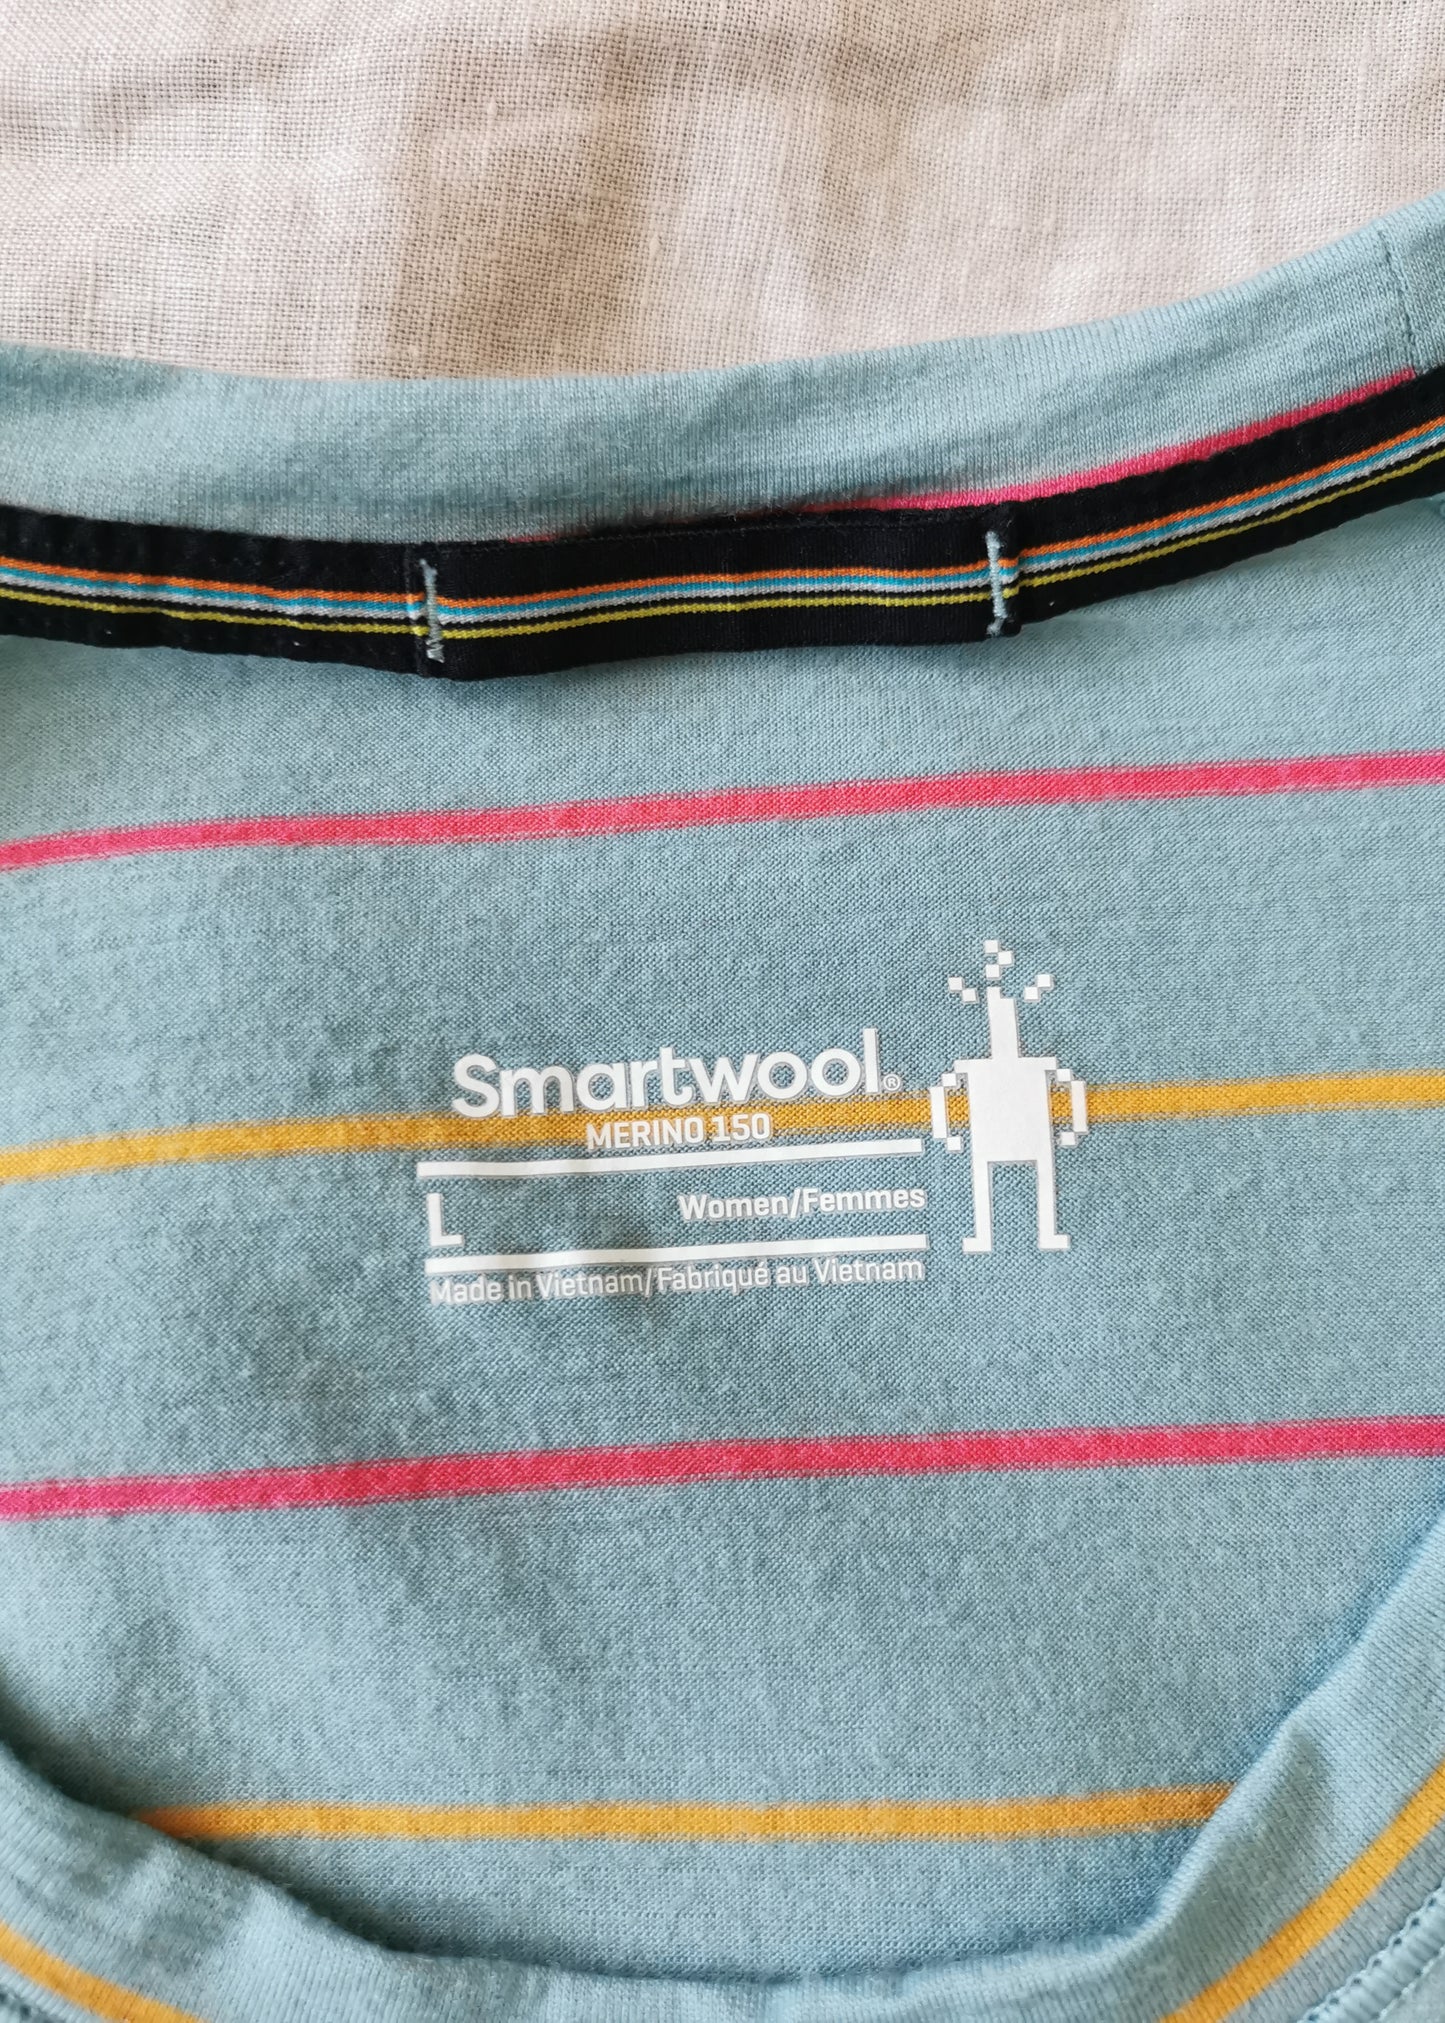 Smartwool Merino Wool Base Layer (L)